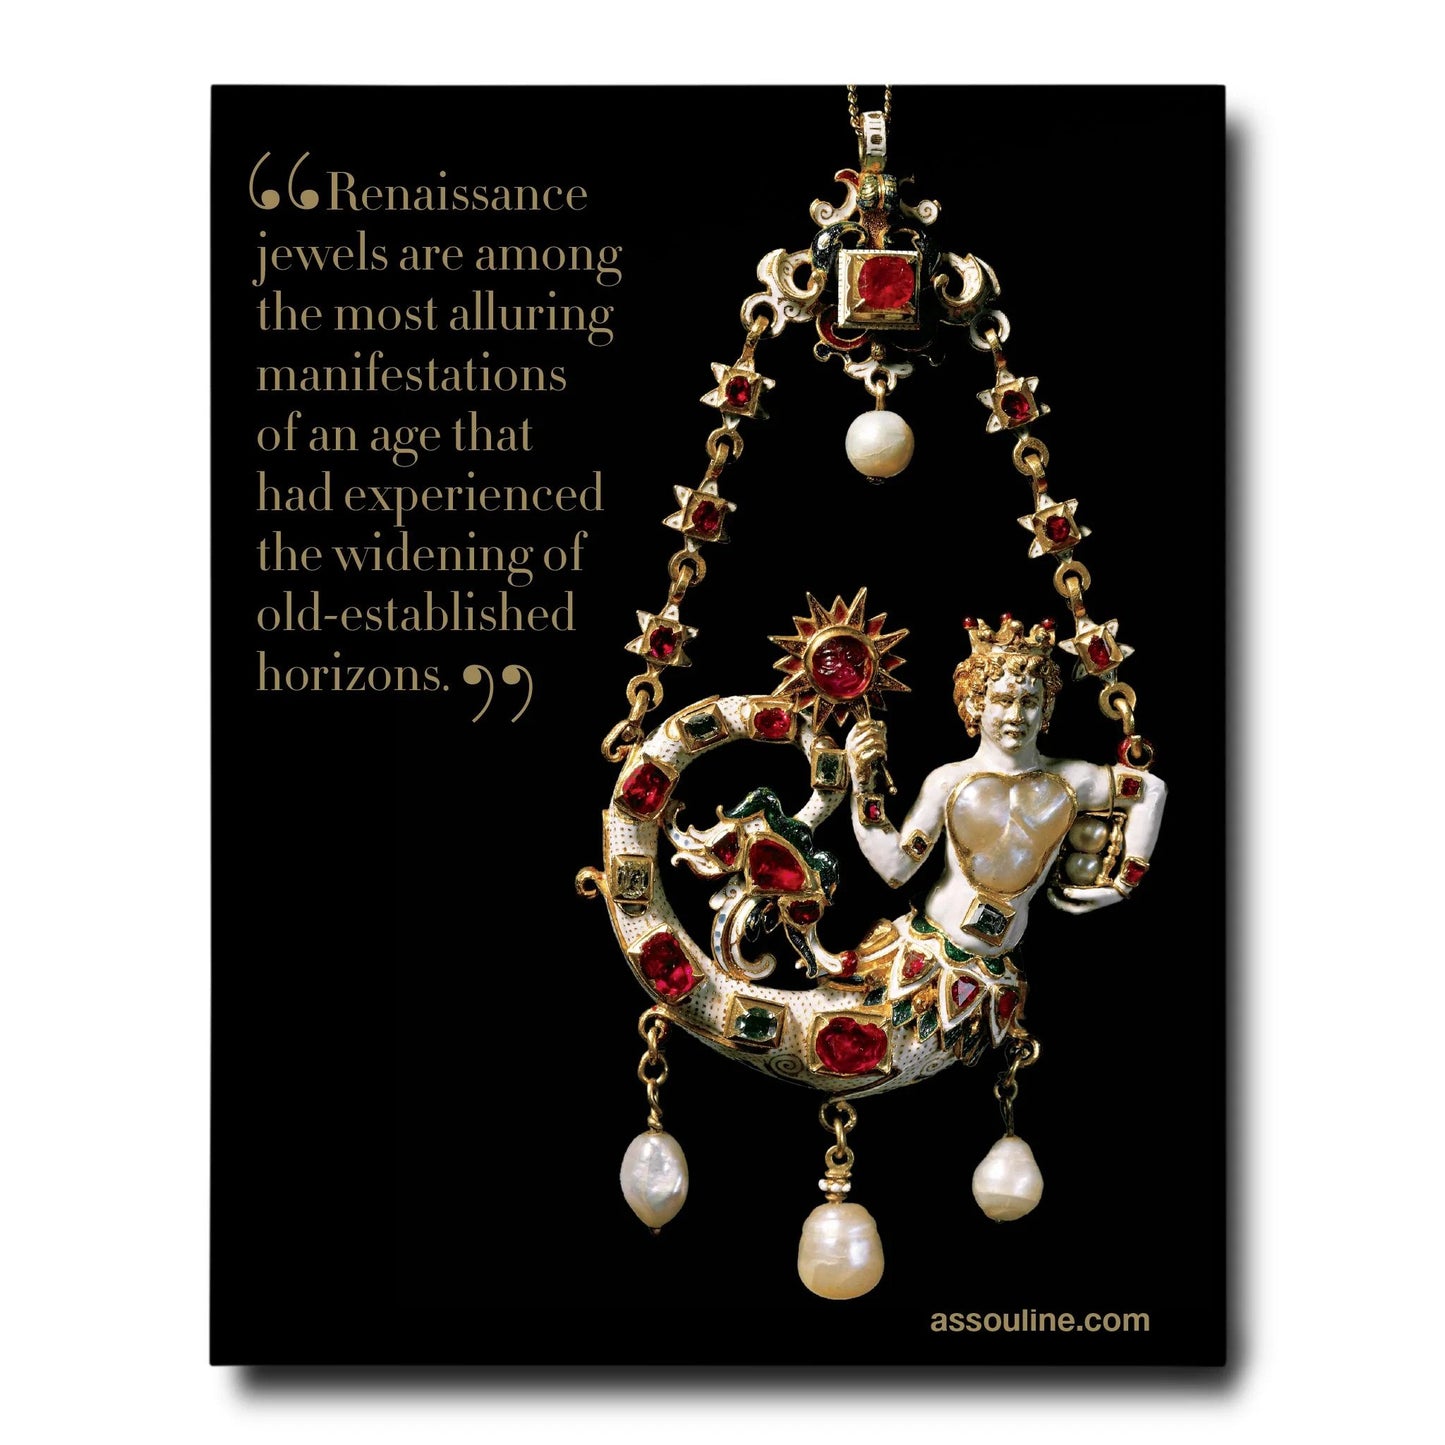 Livre Jewels of the Renaissance | Assouline